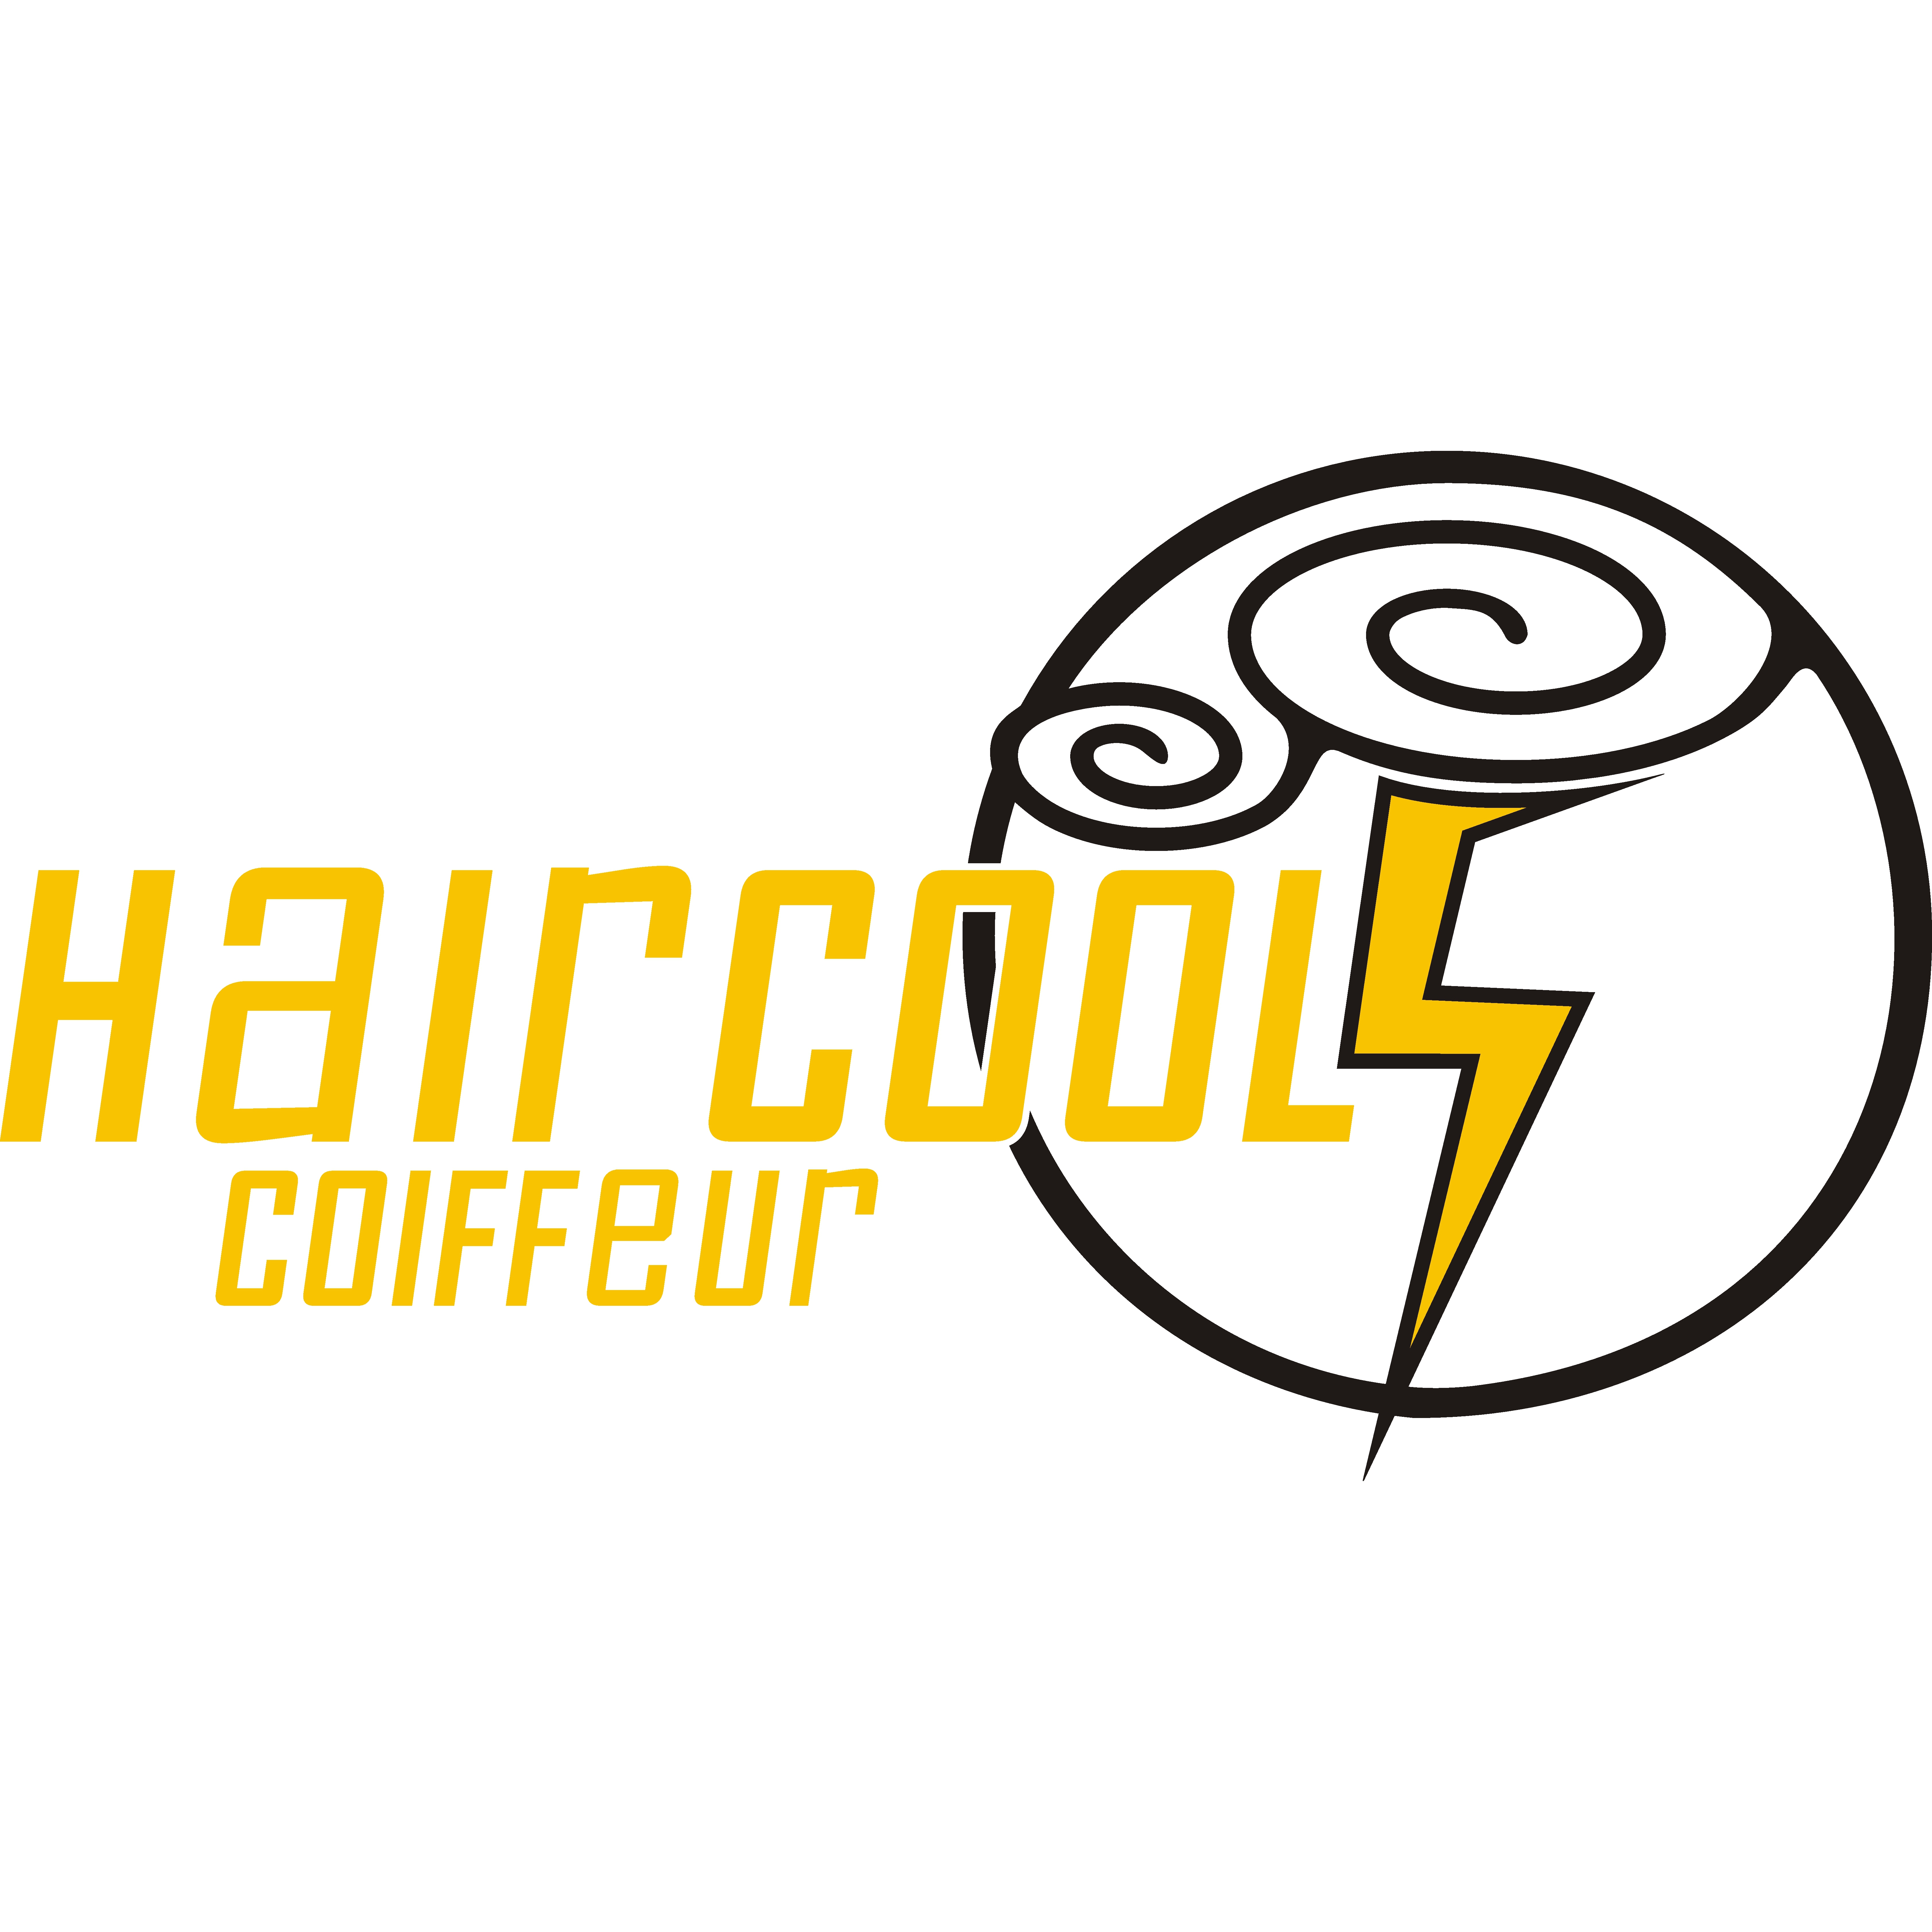 Coiffeur Haircool S, Monika Suter Logo